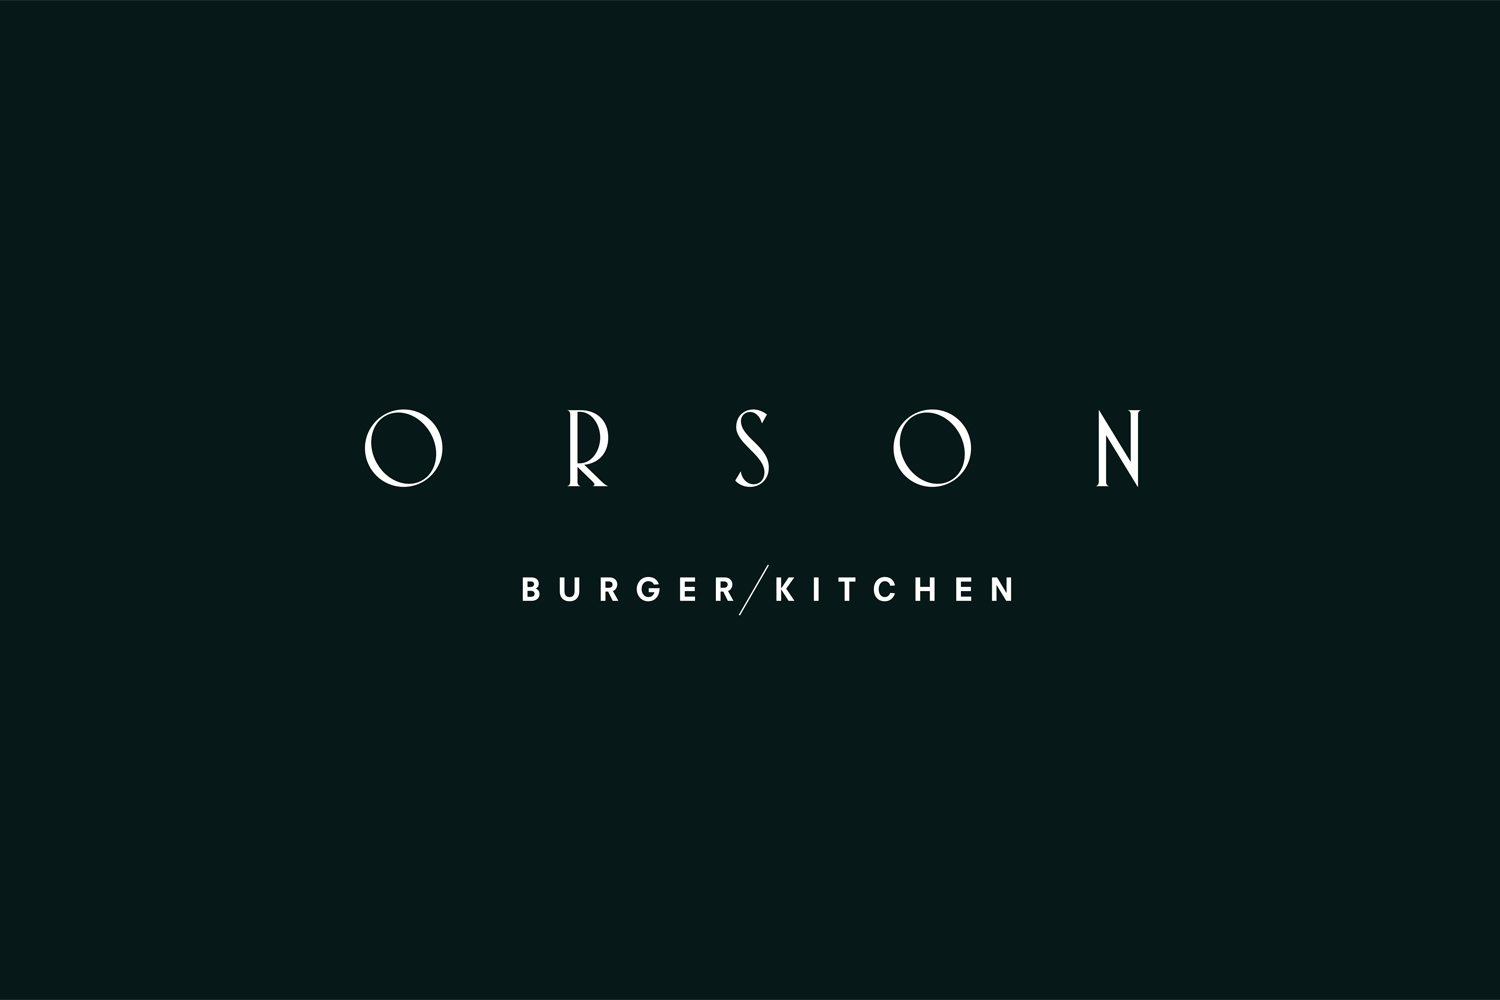 Logotype design by Anagrama for San Pedro based burger bar Orson